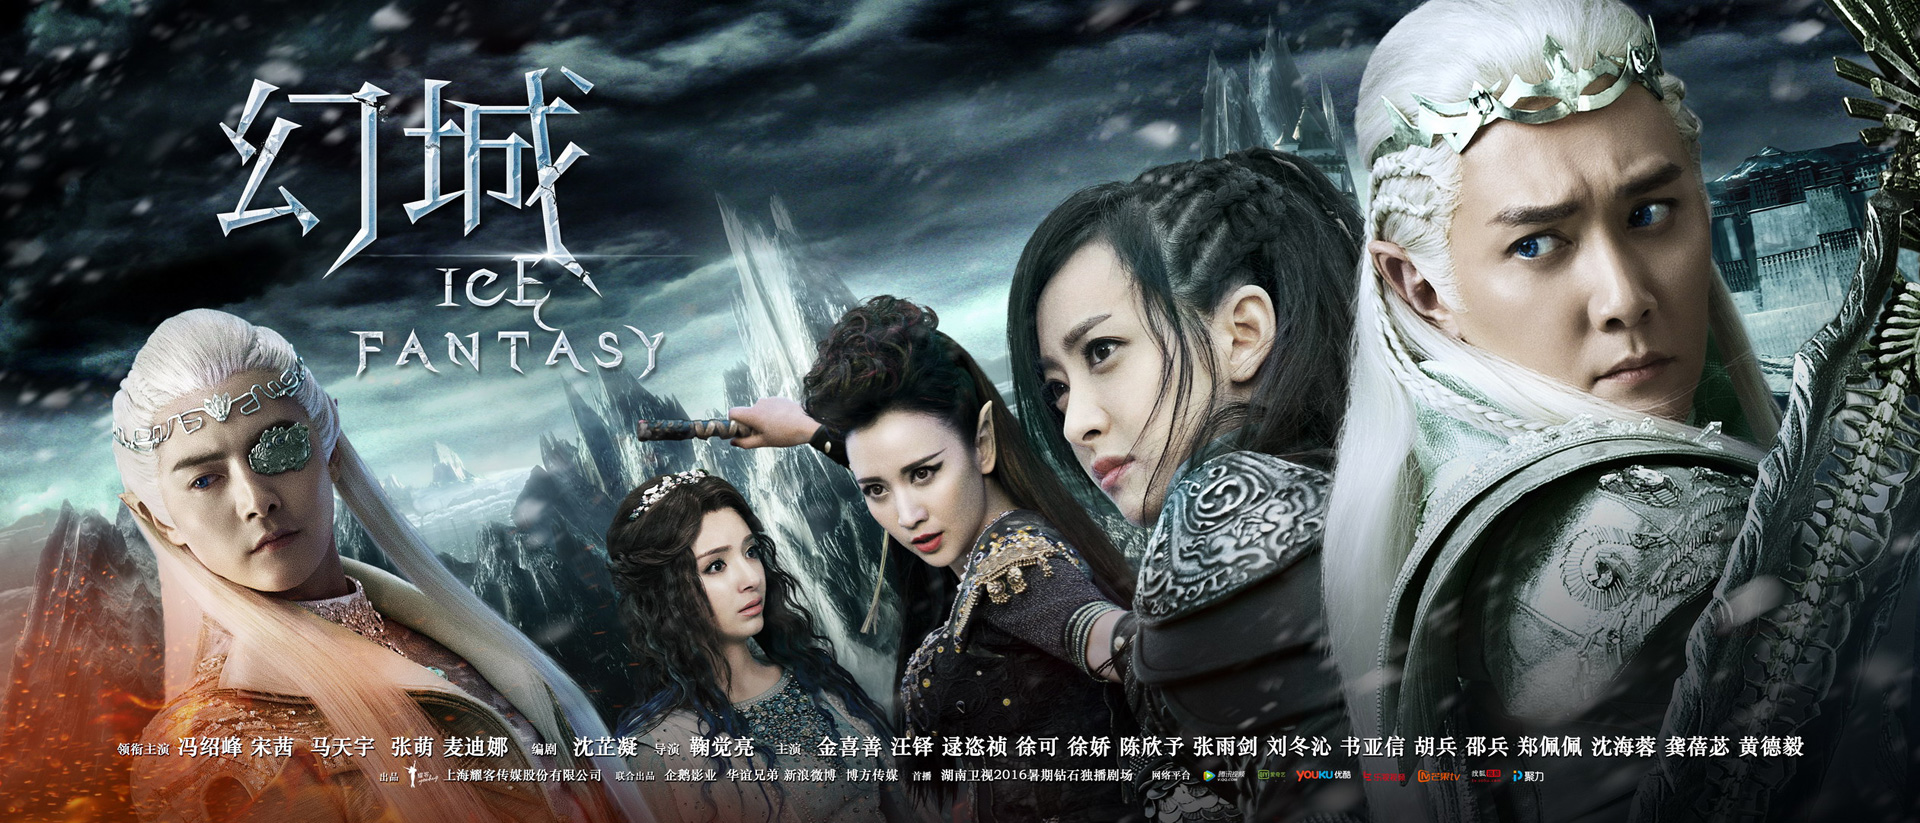 Ice Fantasy (2016) – Chinese Drama